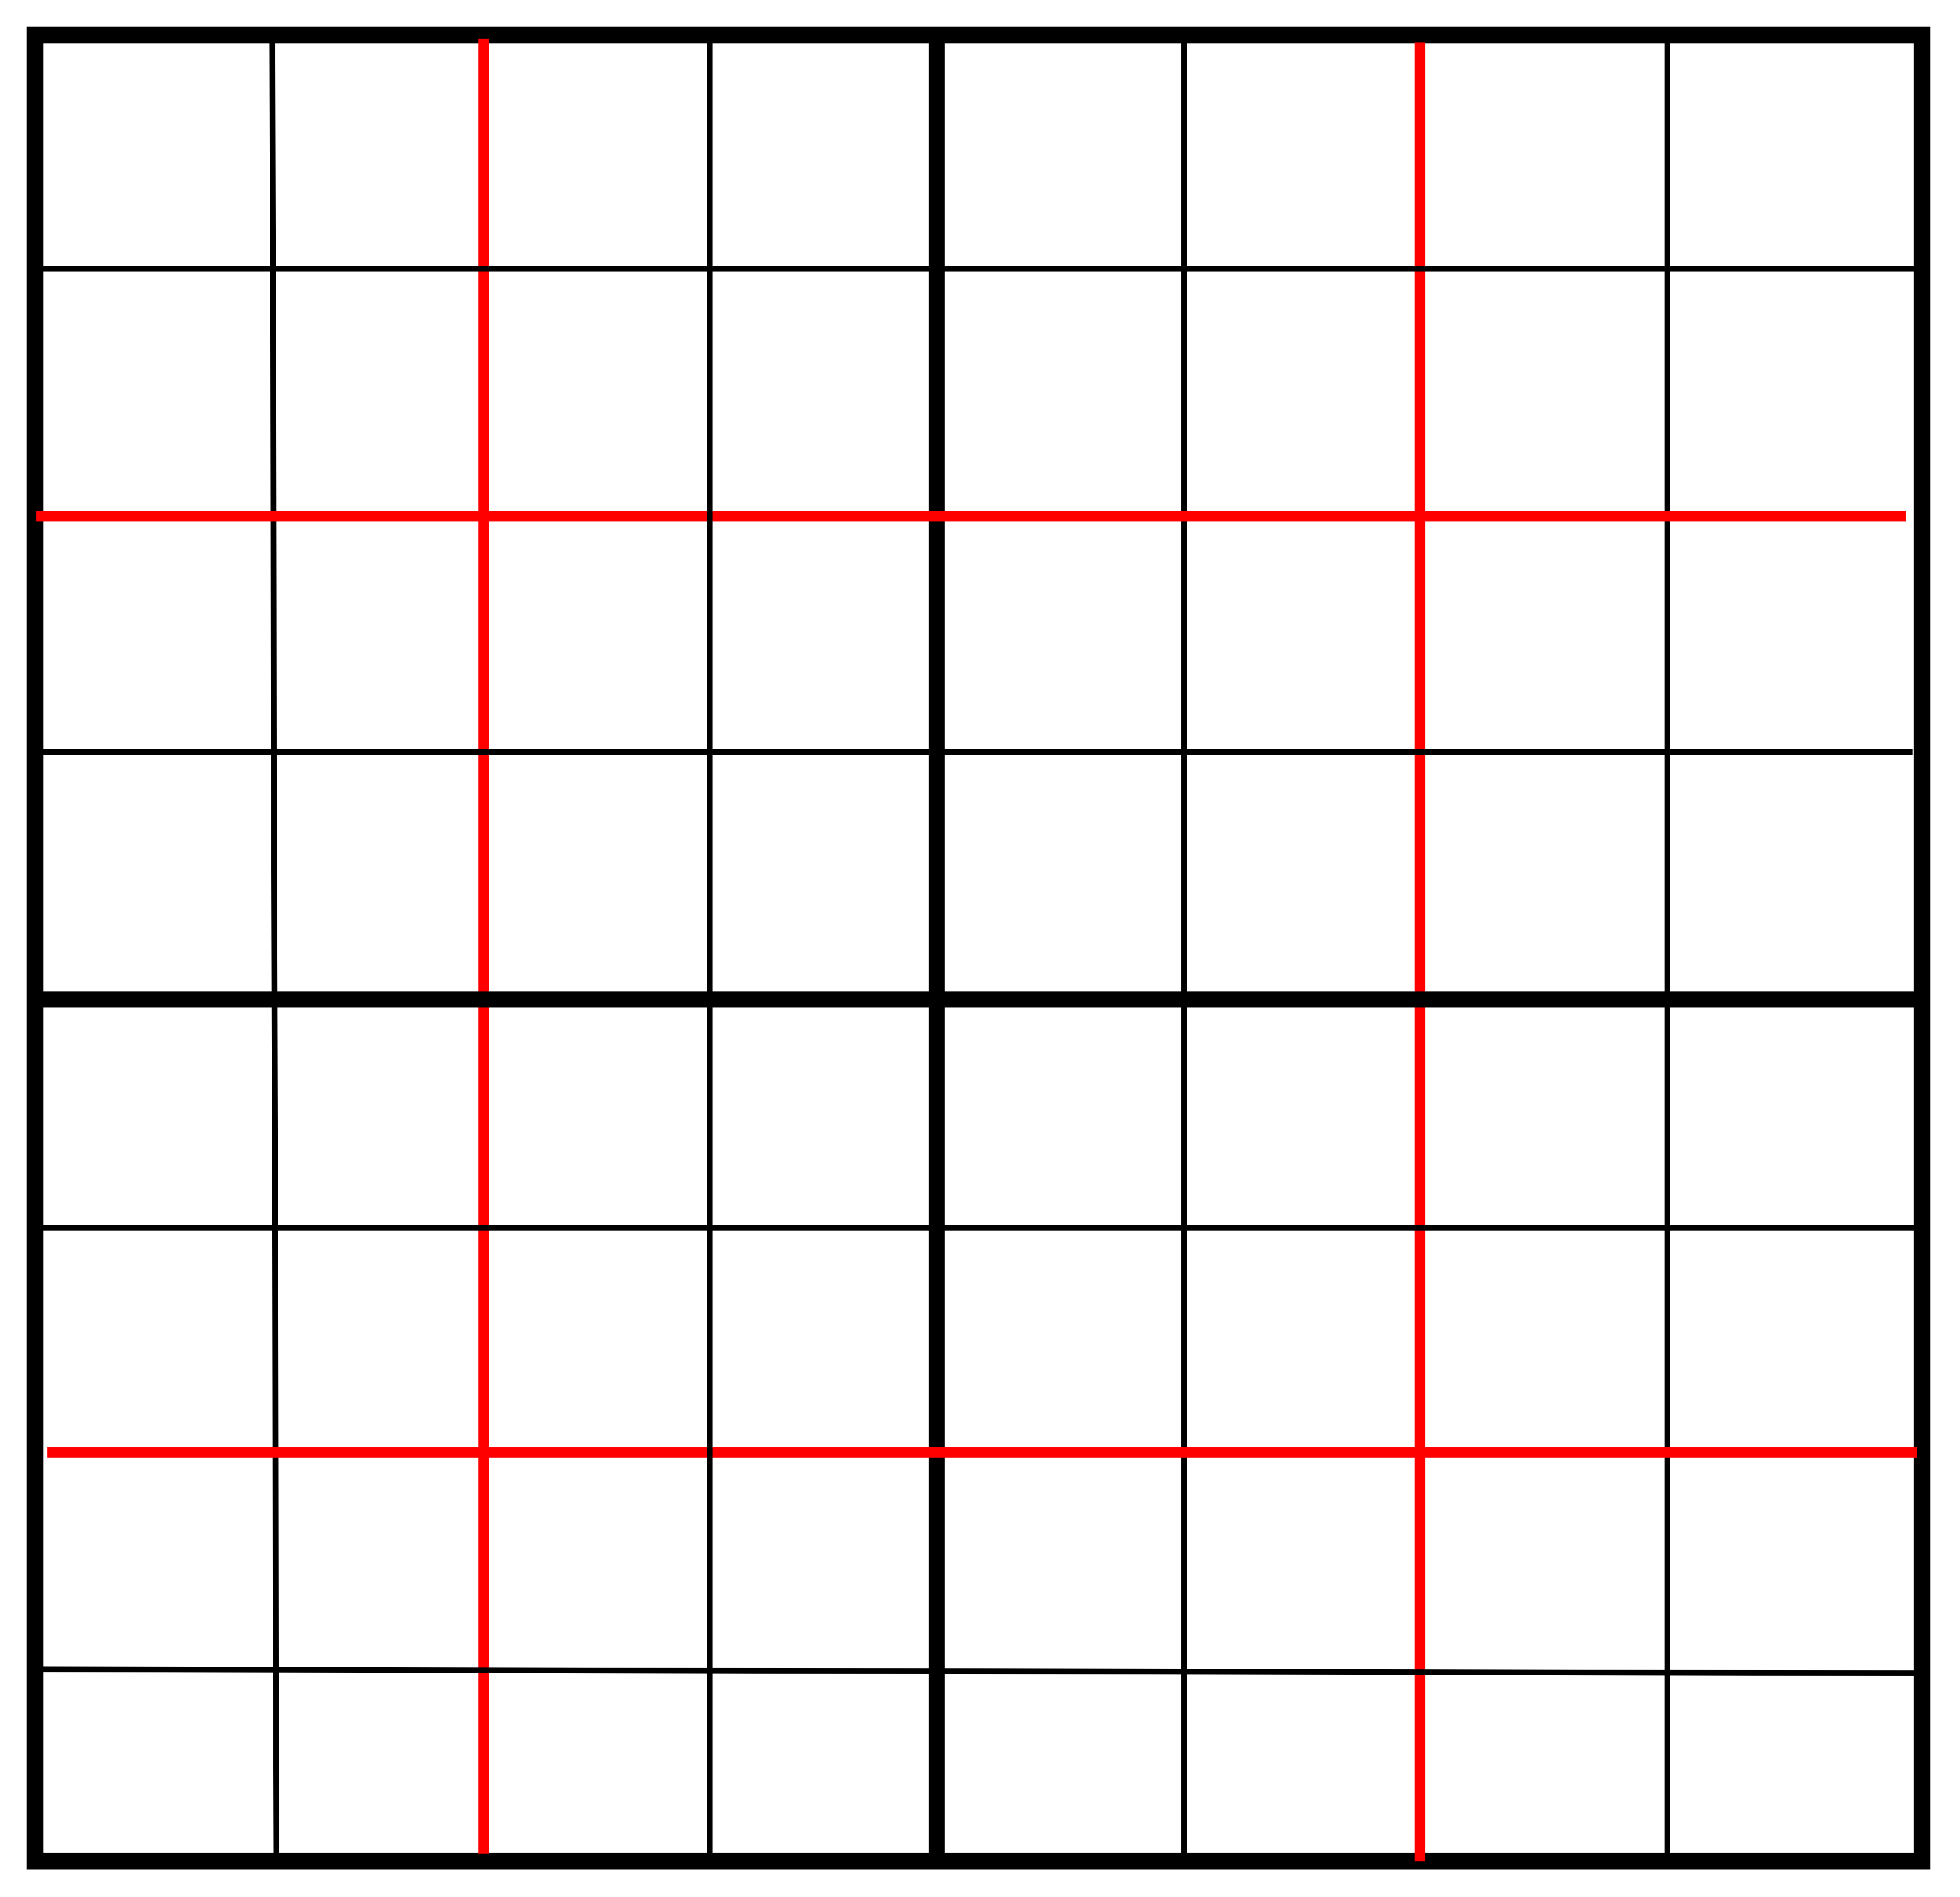 tikz pgf - Using tikzpicture or pgfplots to draw a uniform grid ...